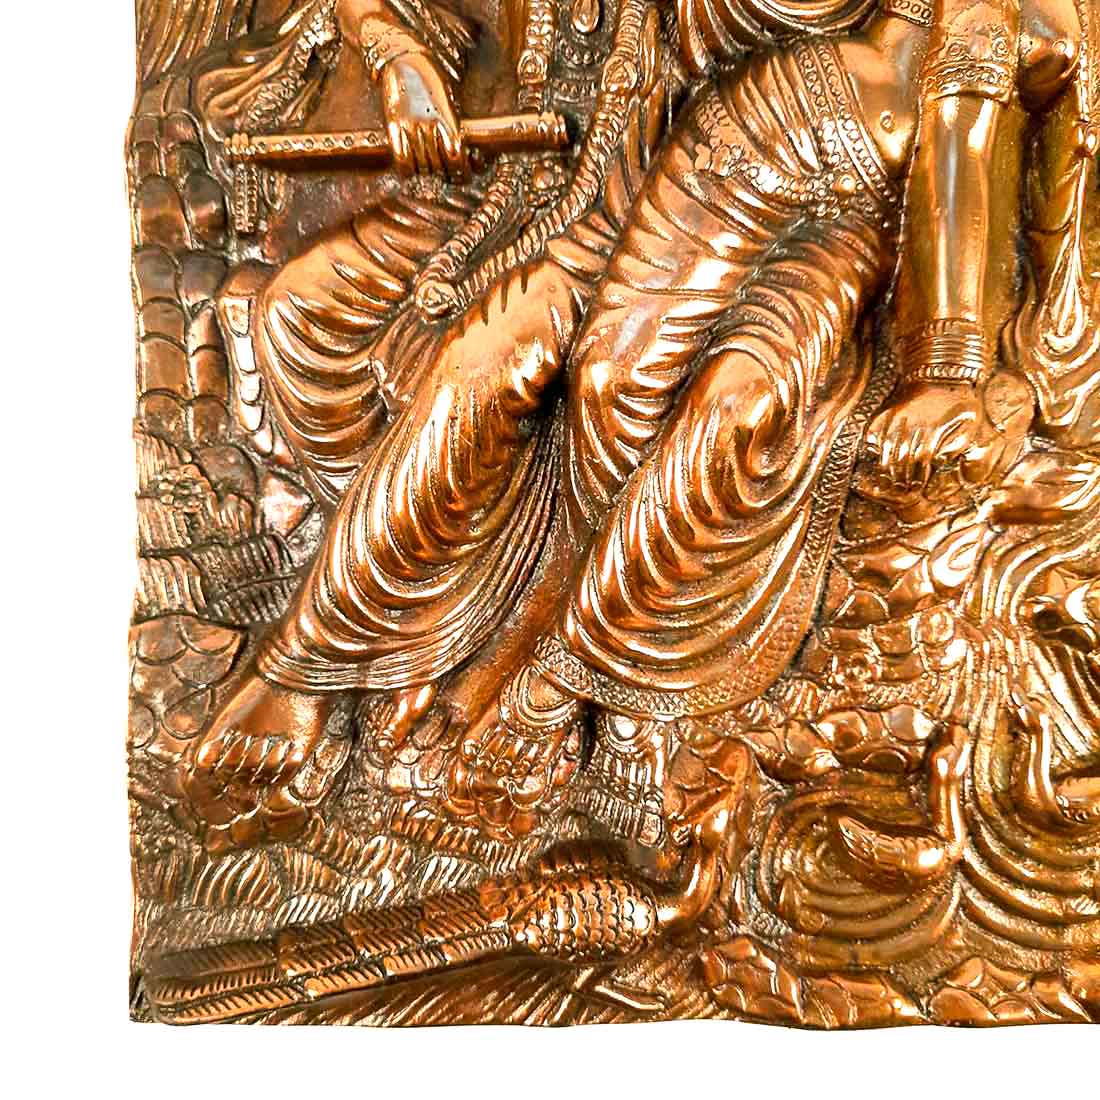 Radha Krishna Wall Hanging Idol | Shri Radha Krishna Wall Hanging Art Statue Murti | Religious & Spiritual Sculpture - for Gift, Home, Living Room, Office, Puja Room Decoration   - 20 inch